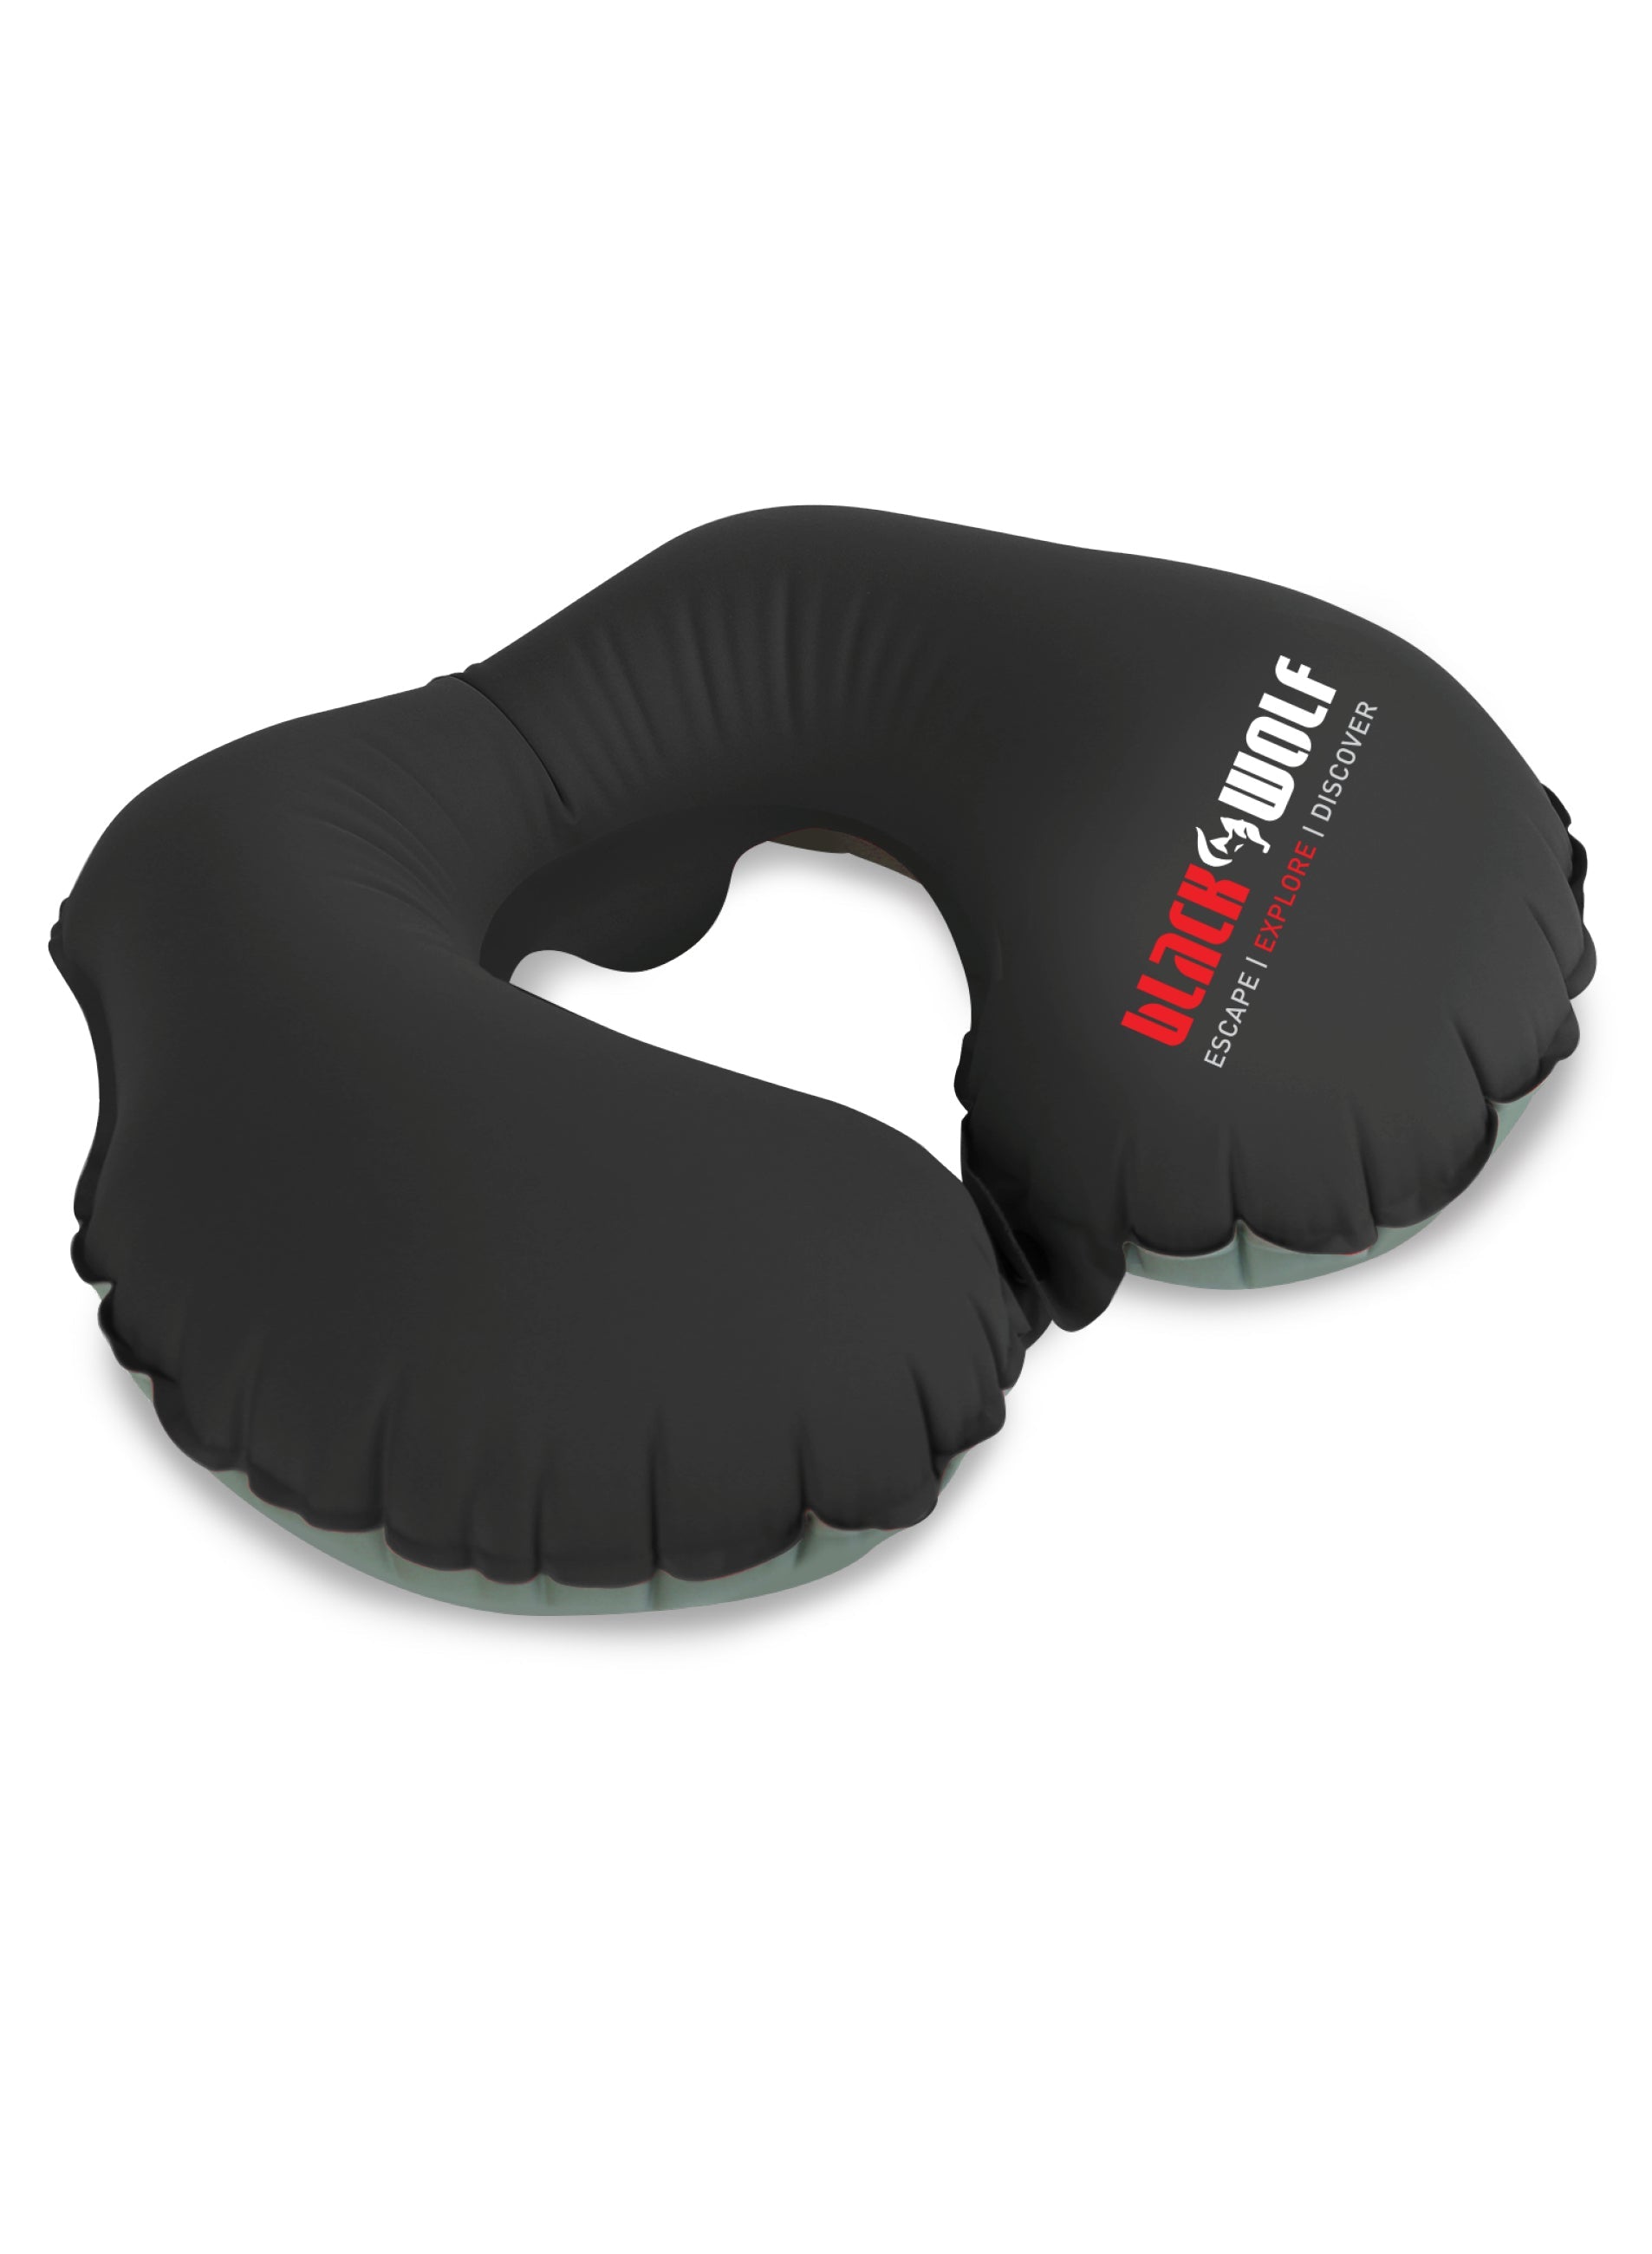 Black Wolf - Air Lite Travel inflatable neck pillow - Black